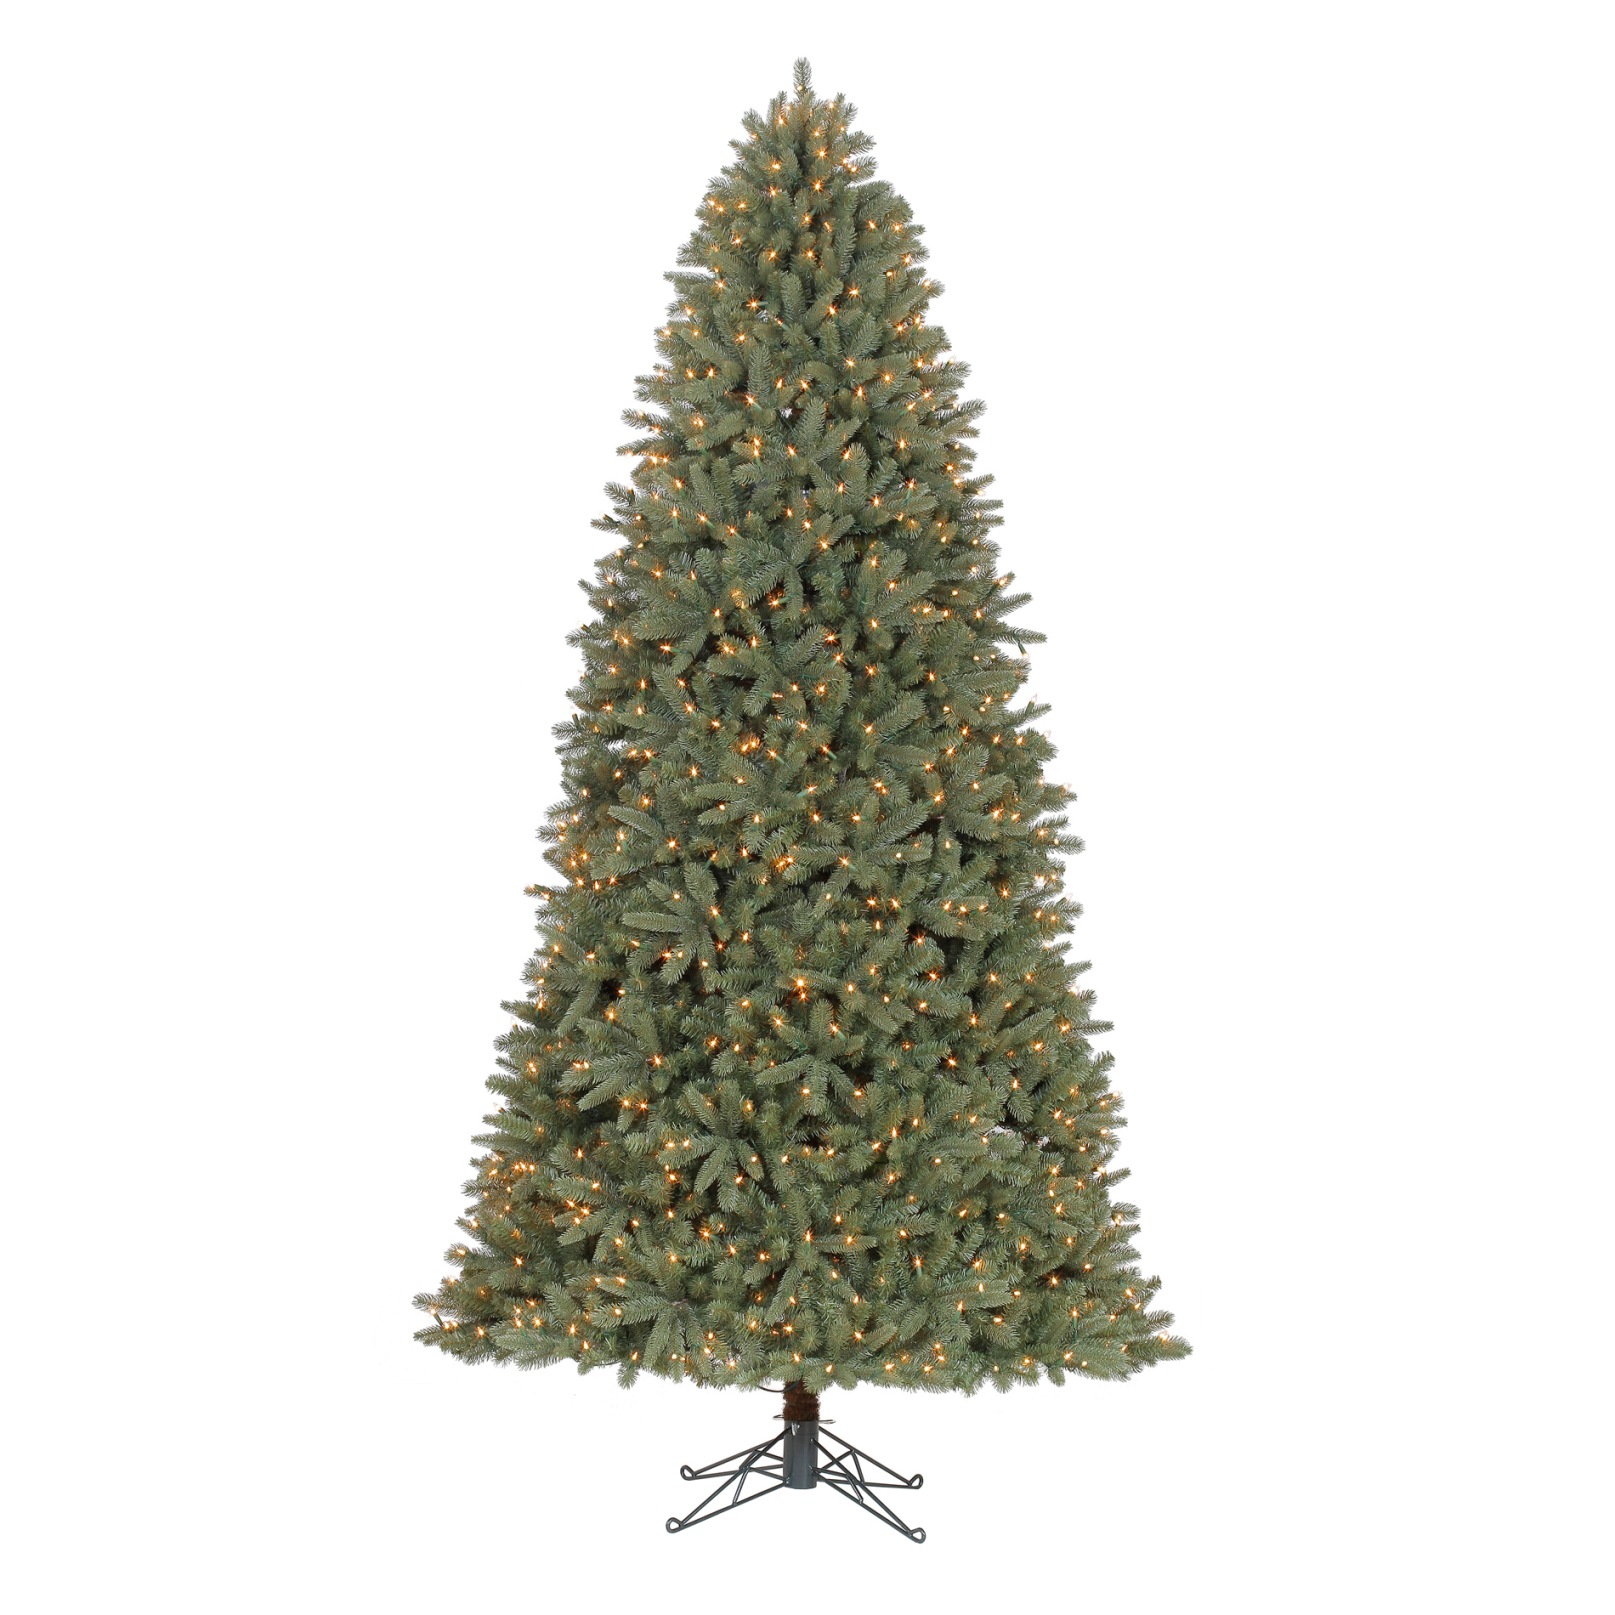 Roebuck & Co. 9' Pre-Lit Whitmore Pine Christmas Tree